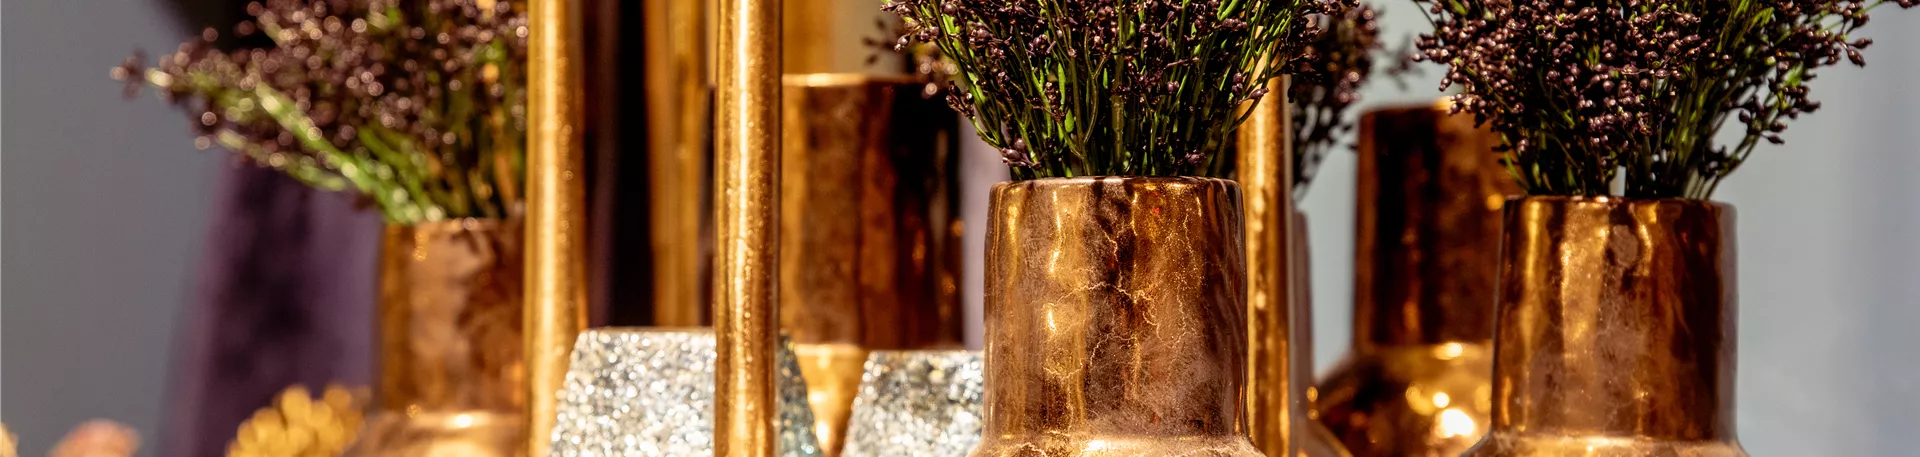 Deko - goldene Vasen mit Kunstblumen